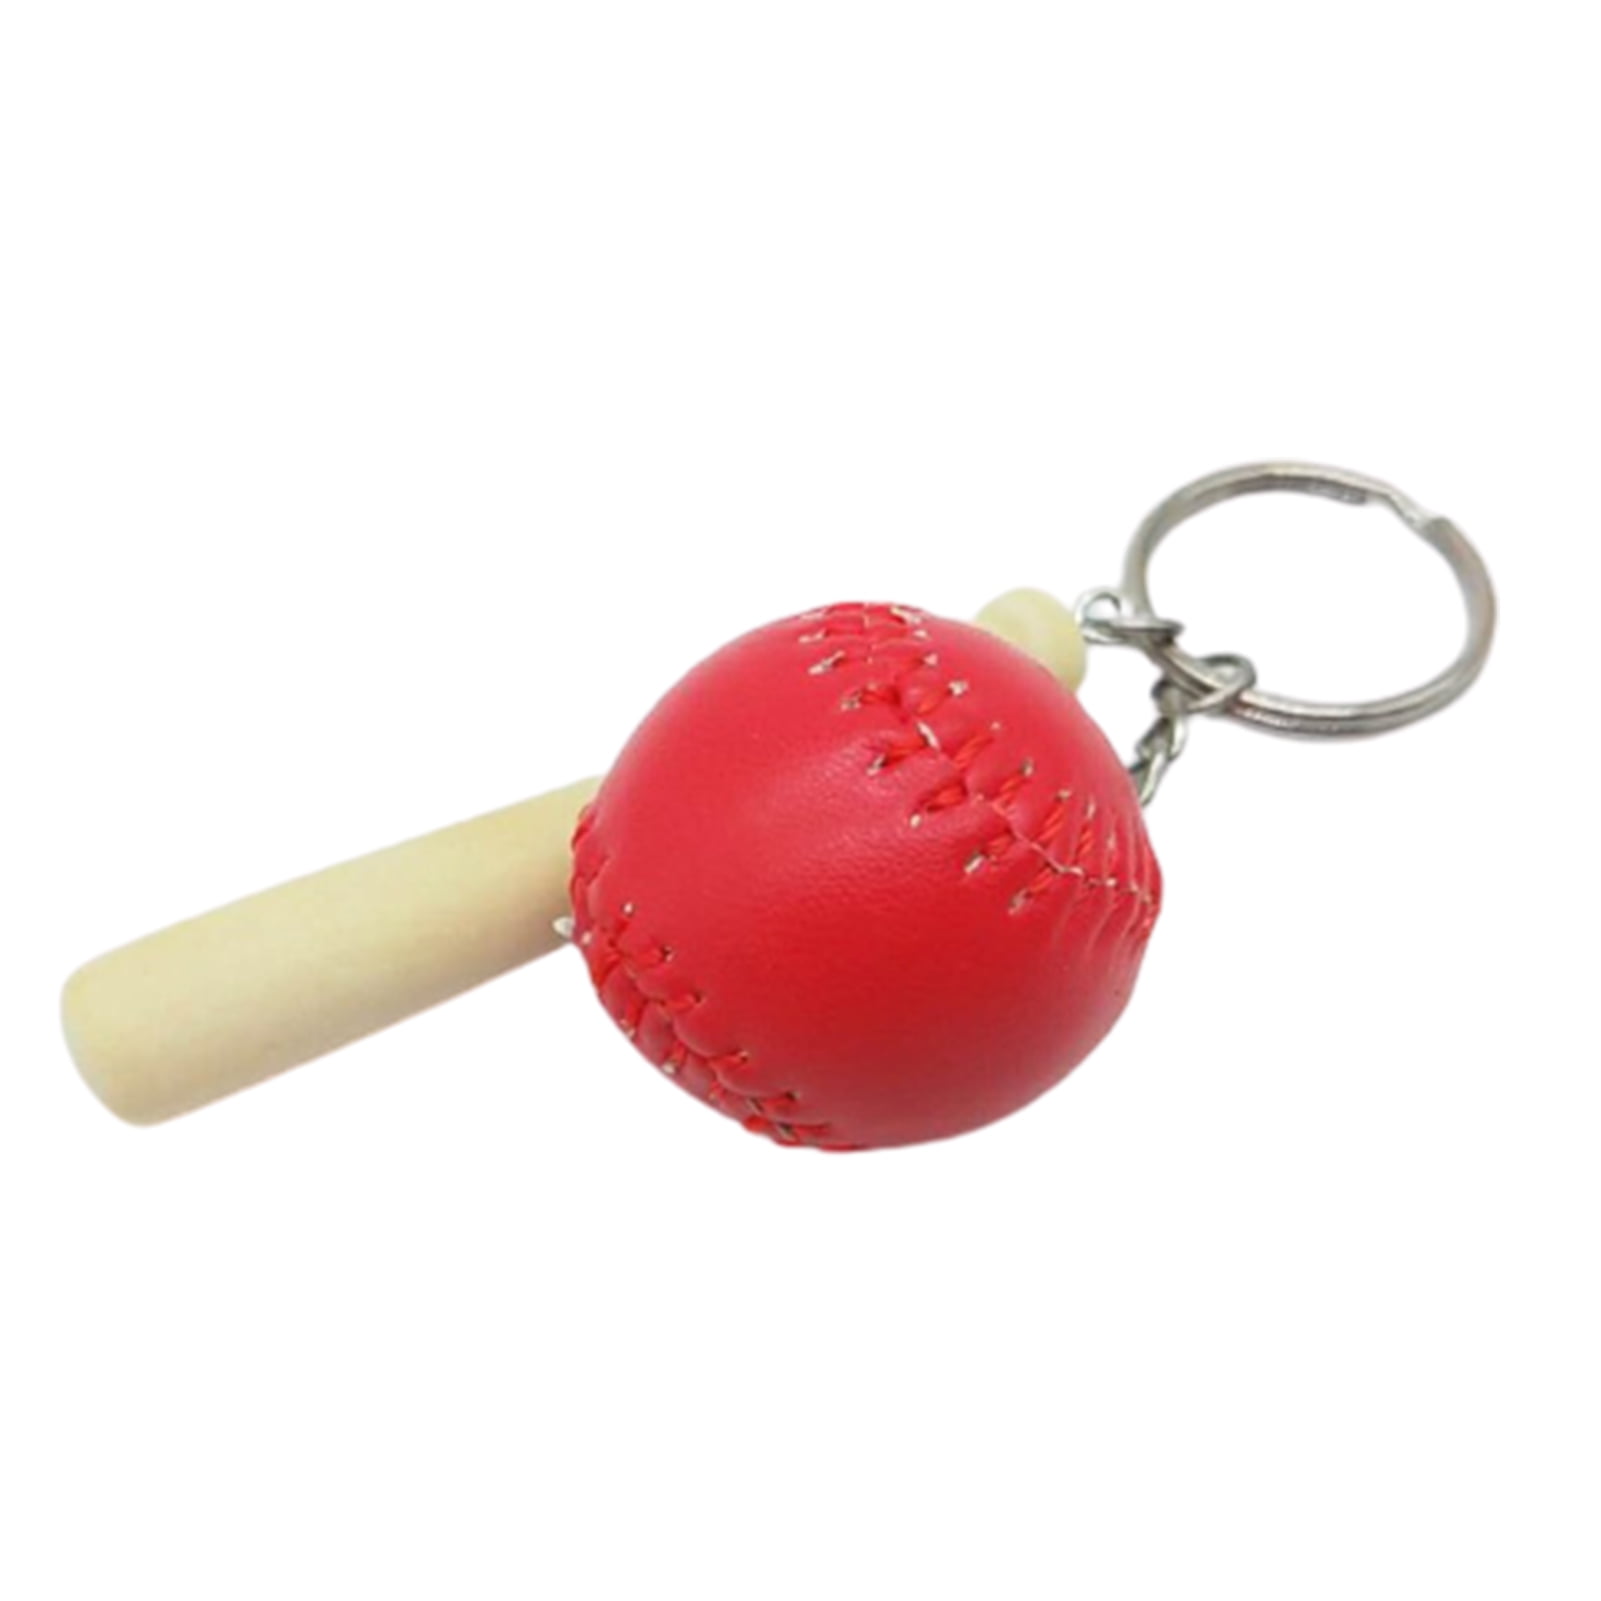 Baseball Fan Keyring Fans Bat Cap Glove & Ball Key Ring Gift Souvenir Charms